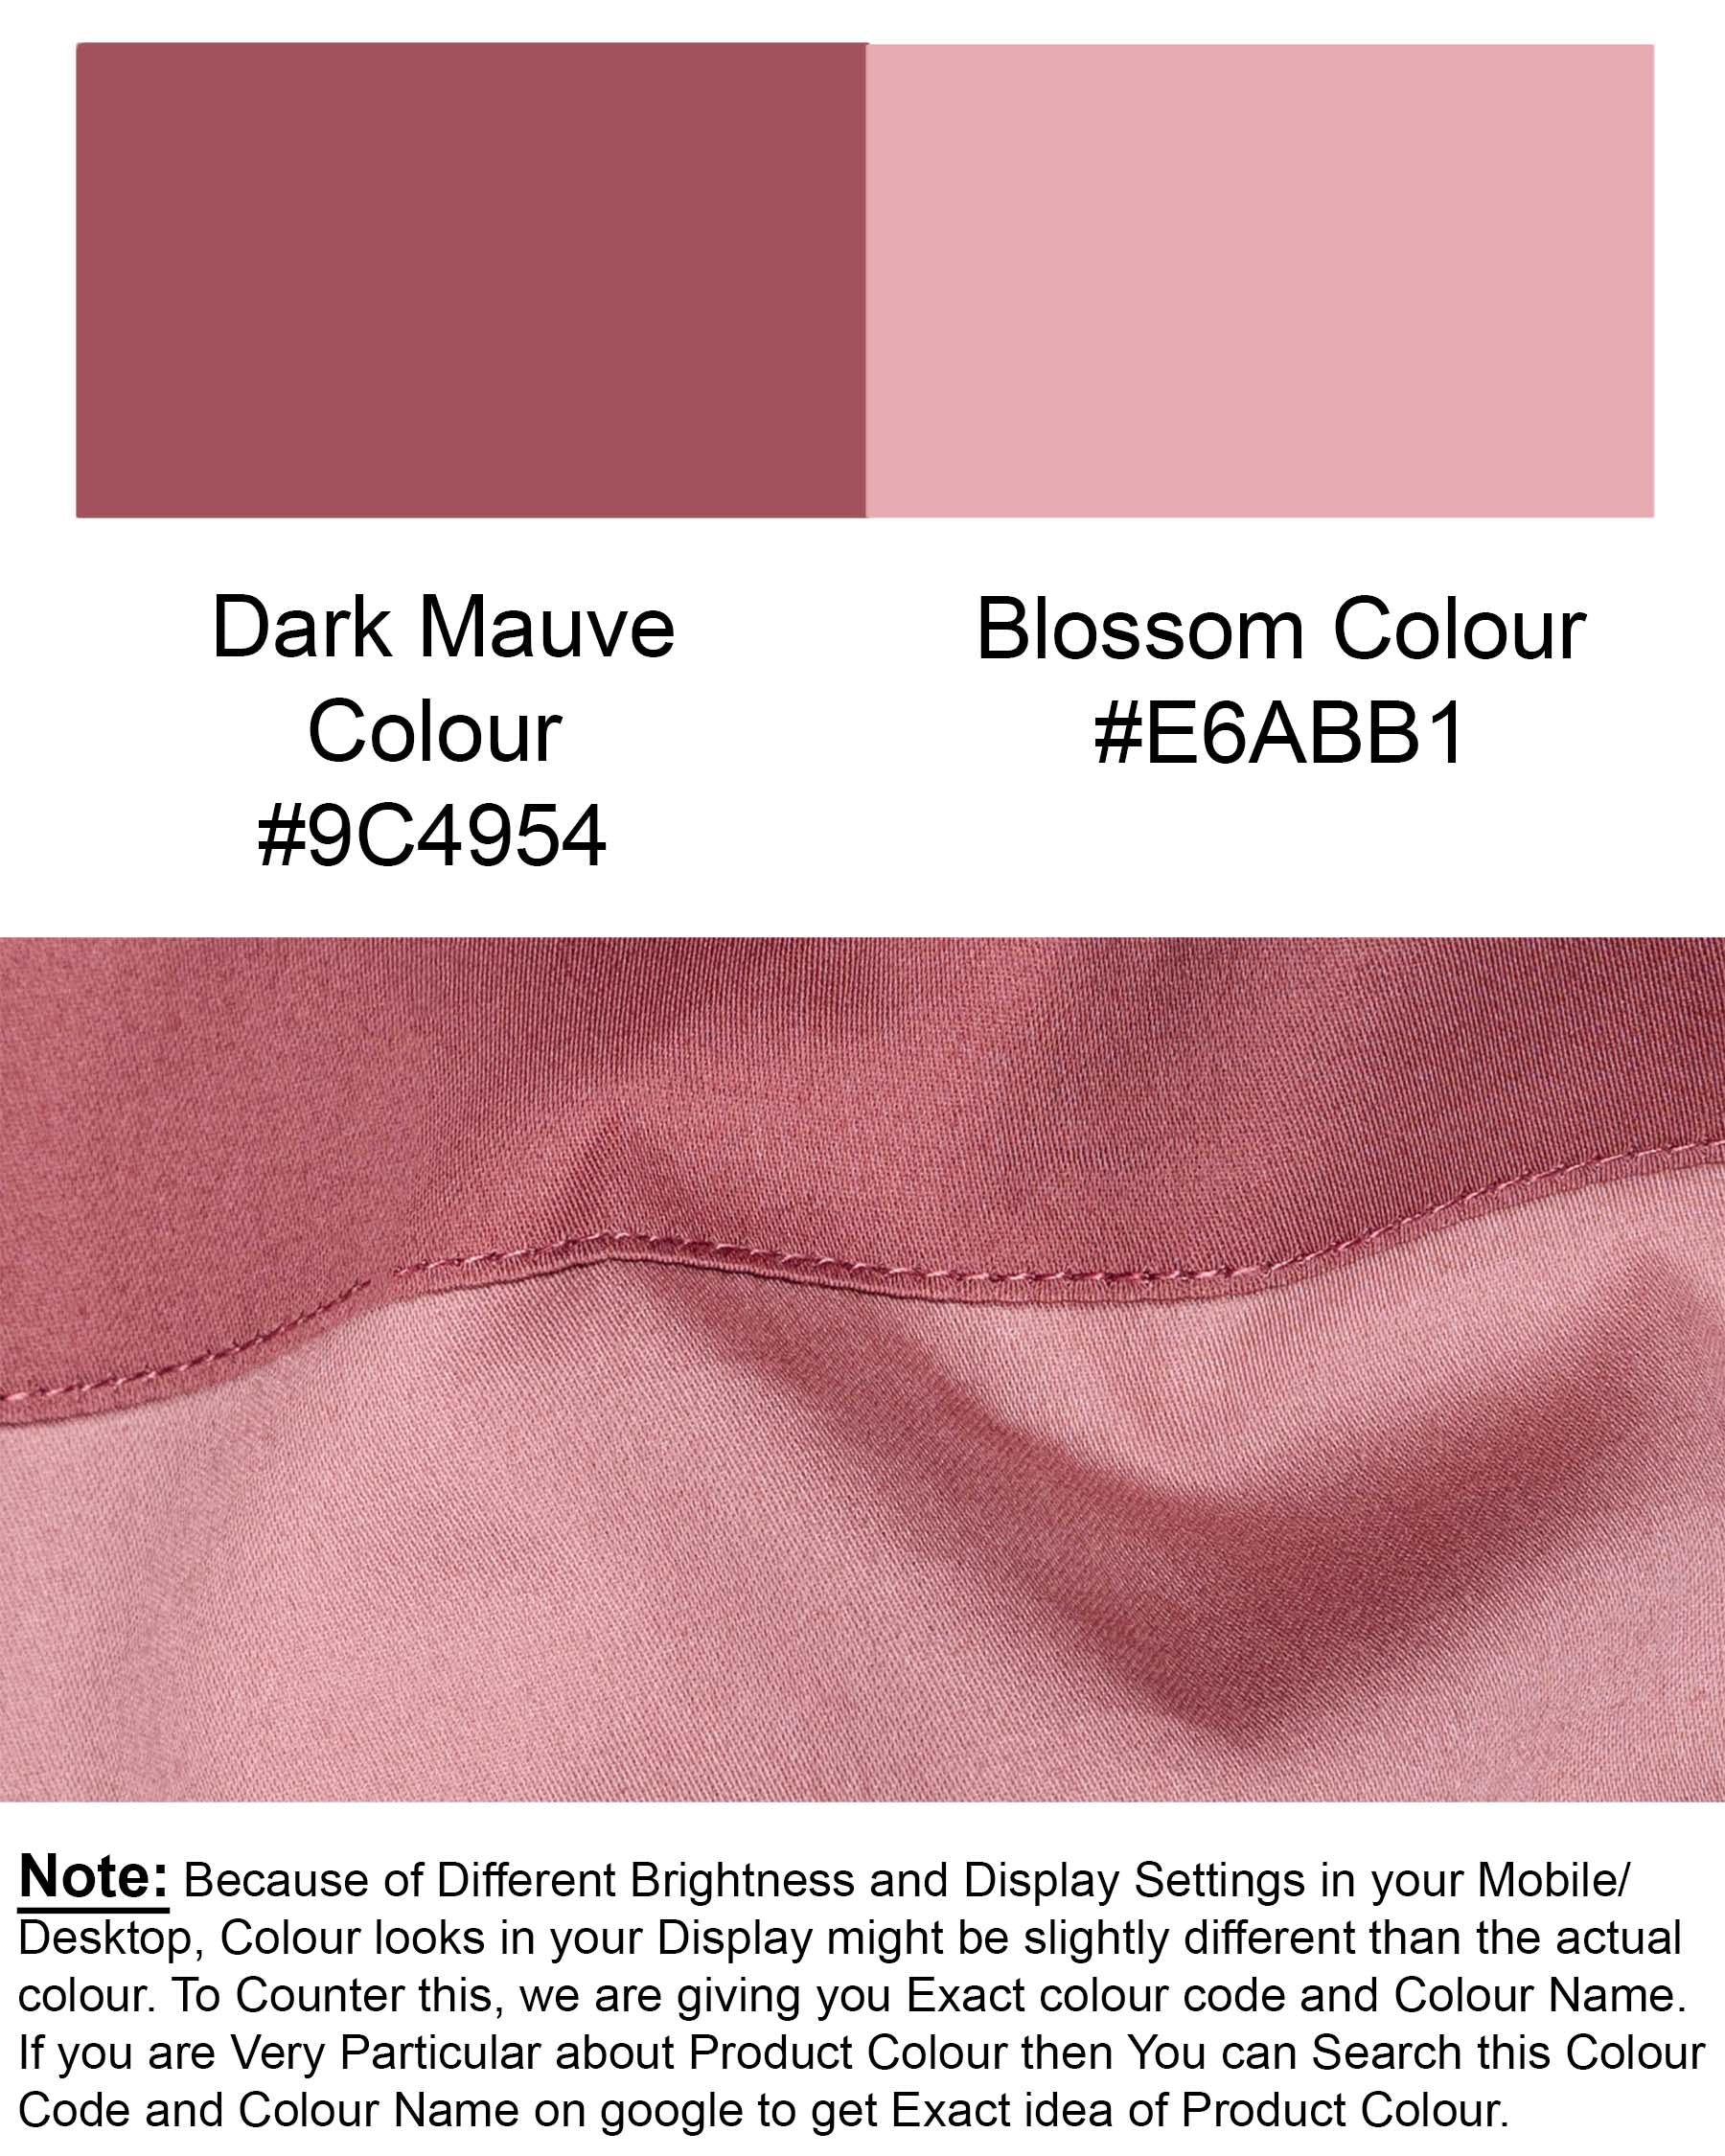 Dark Mauve and Blossom Pink Super Soft Premium Cotton Shirt 6987-P134-38,6987-P134-38,6987-P134-39,6987-P134-39,6987-P134-40,6987-P134-40,6987-P134-42,6987-P134-42,6987-P134-44,6987-P134-44,6987-P134-46,6987-P134-46,6987-P134-48,6987-P134-48,6987-P134-50,6987-P134-50,6987-P134-52,6987-P134-52